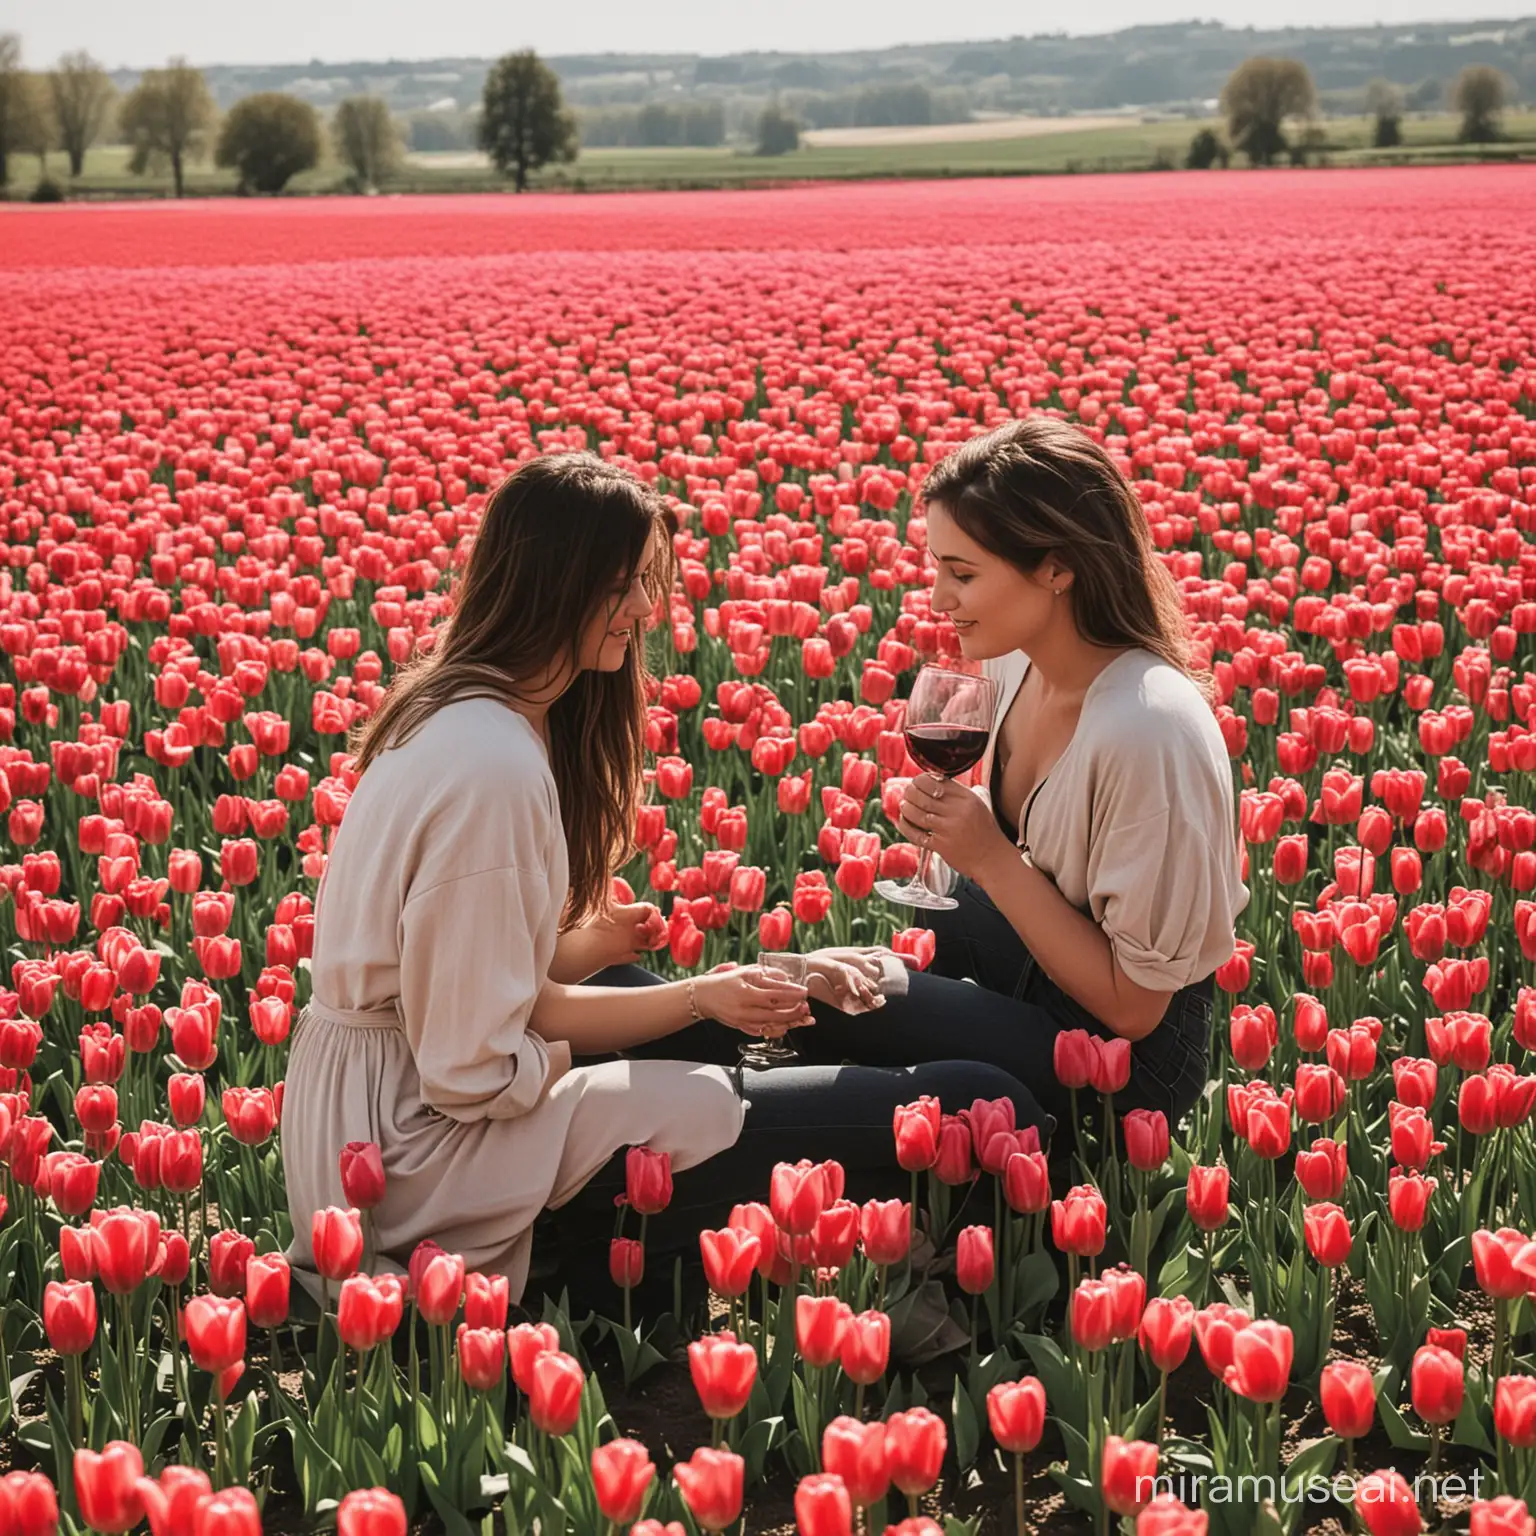 Couple Enjoying Wine Amidst Vibrant Tulip Fields